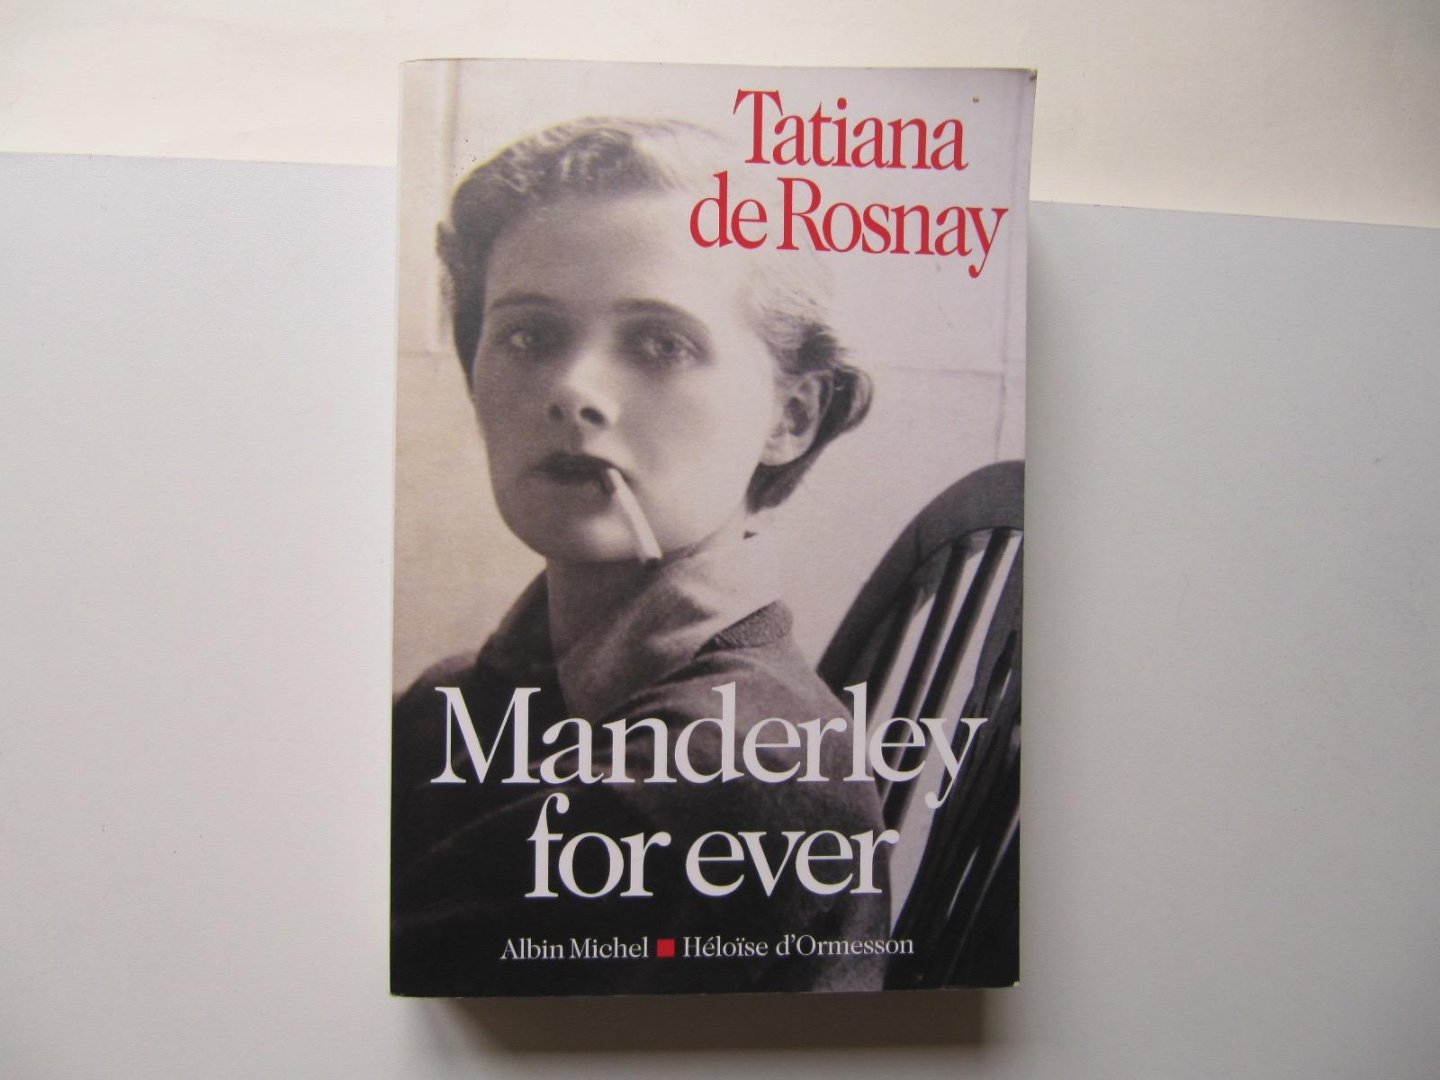 Rosnay, Tatiana de - Manderley for ever